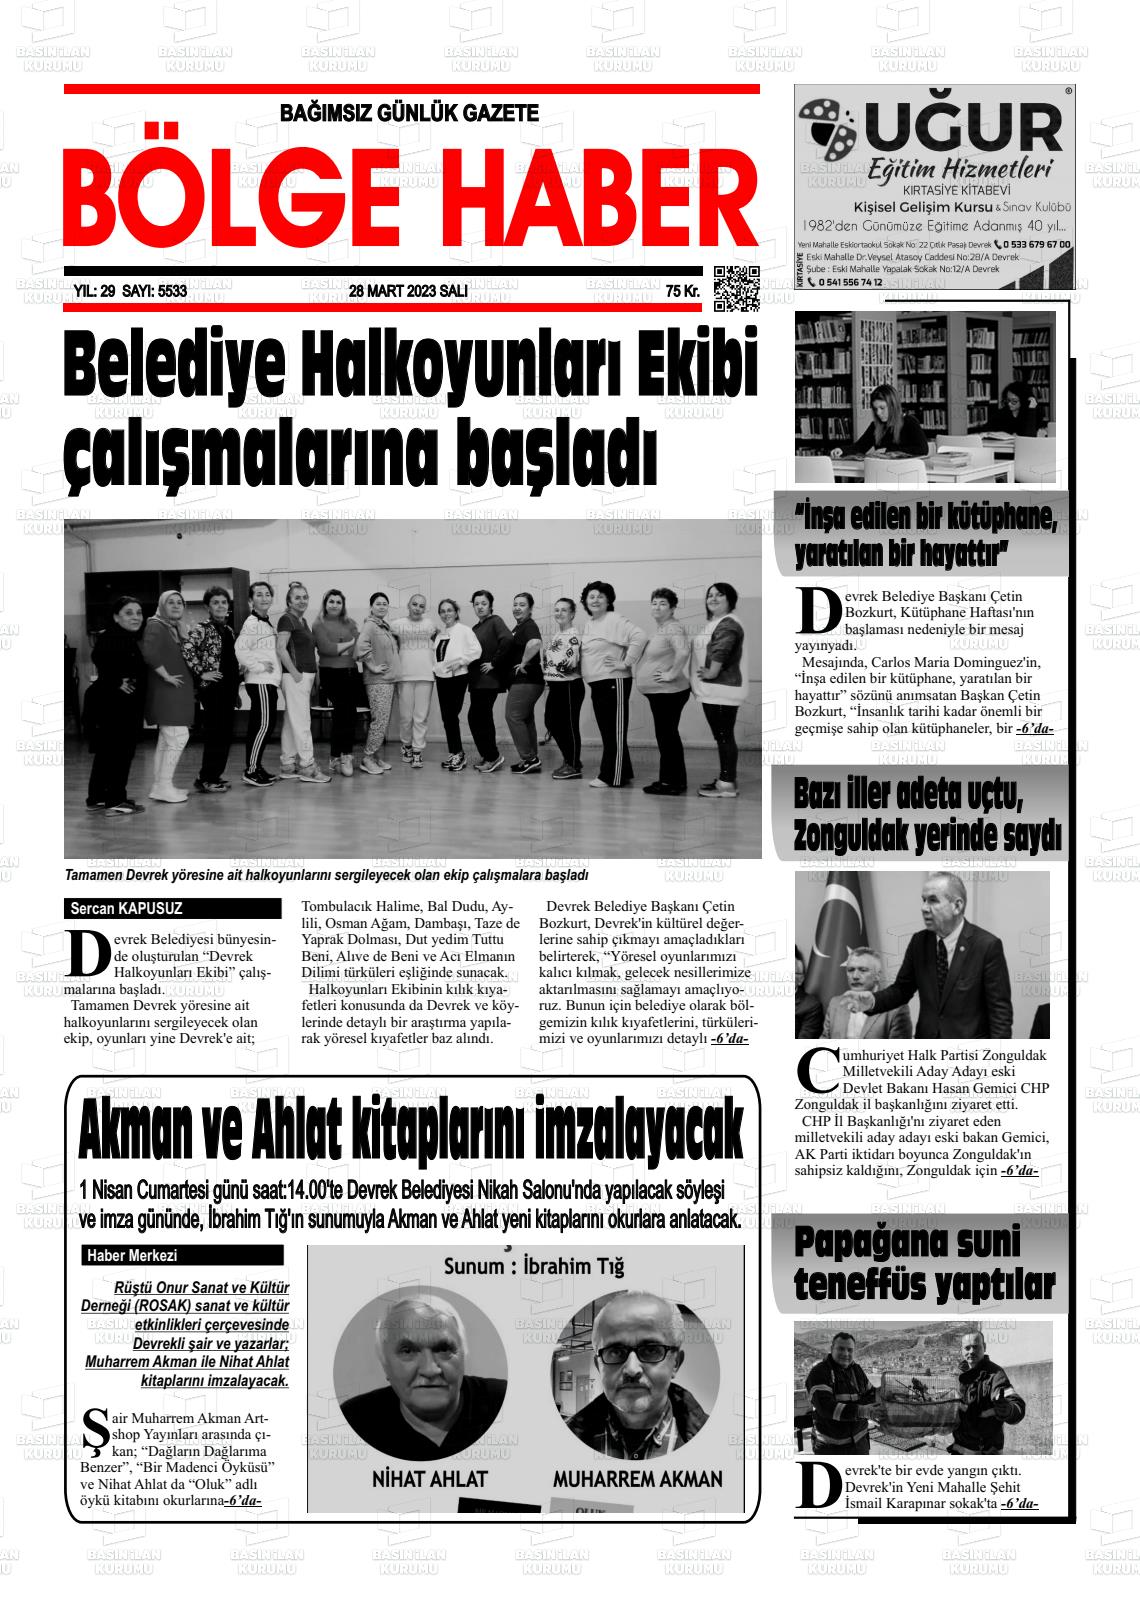 28 Mart 2023 Devrek Bölge Haber Gazete Manşeti